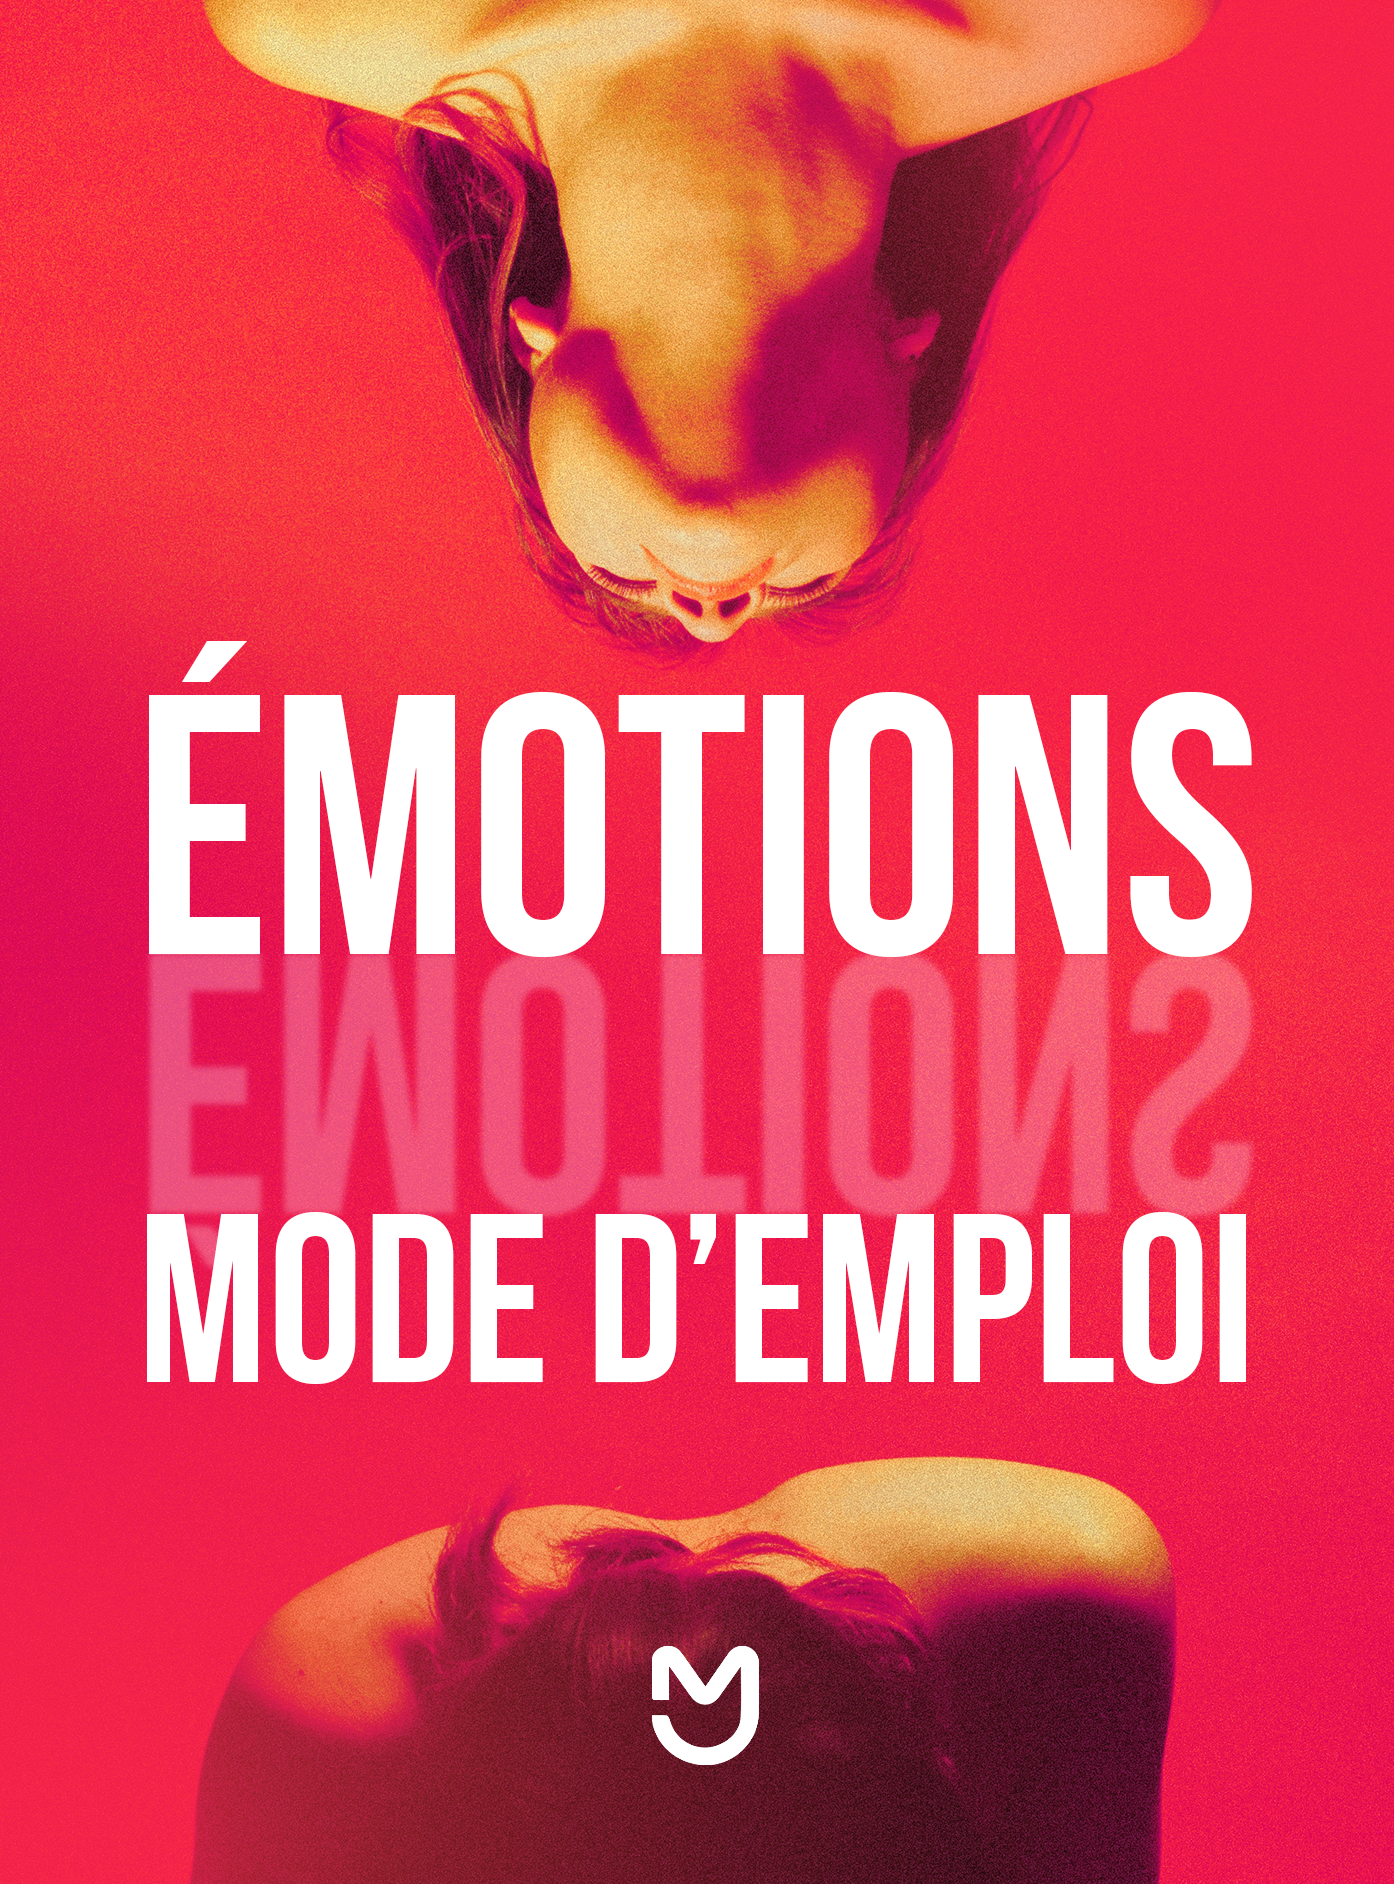 Emotions, mode d'emploi